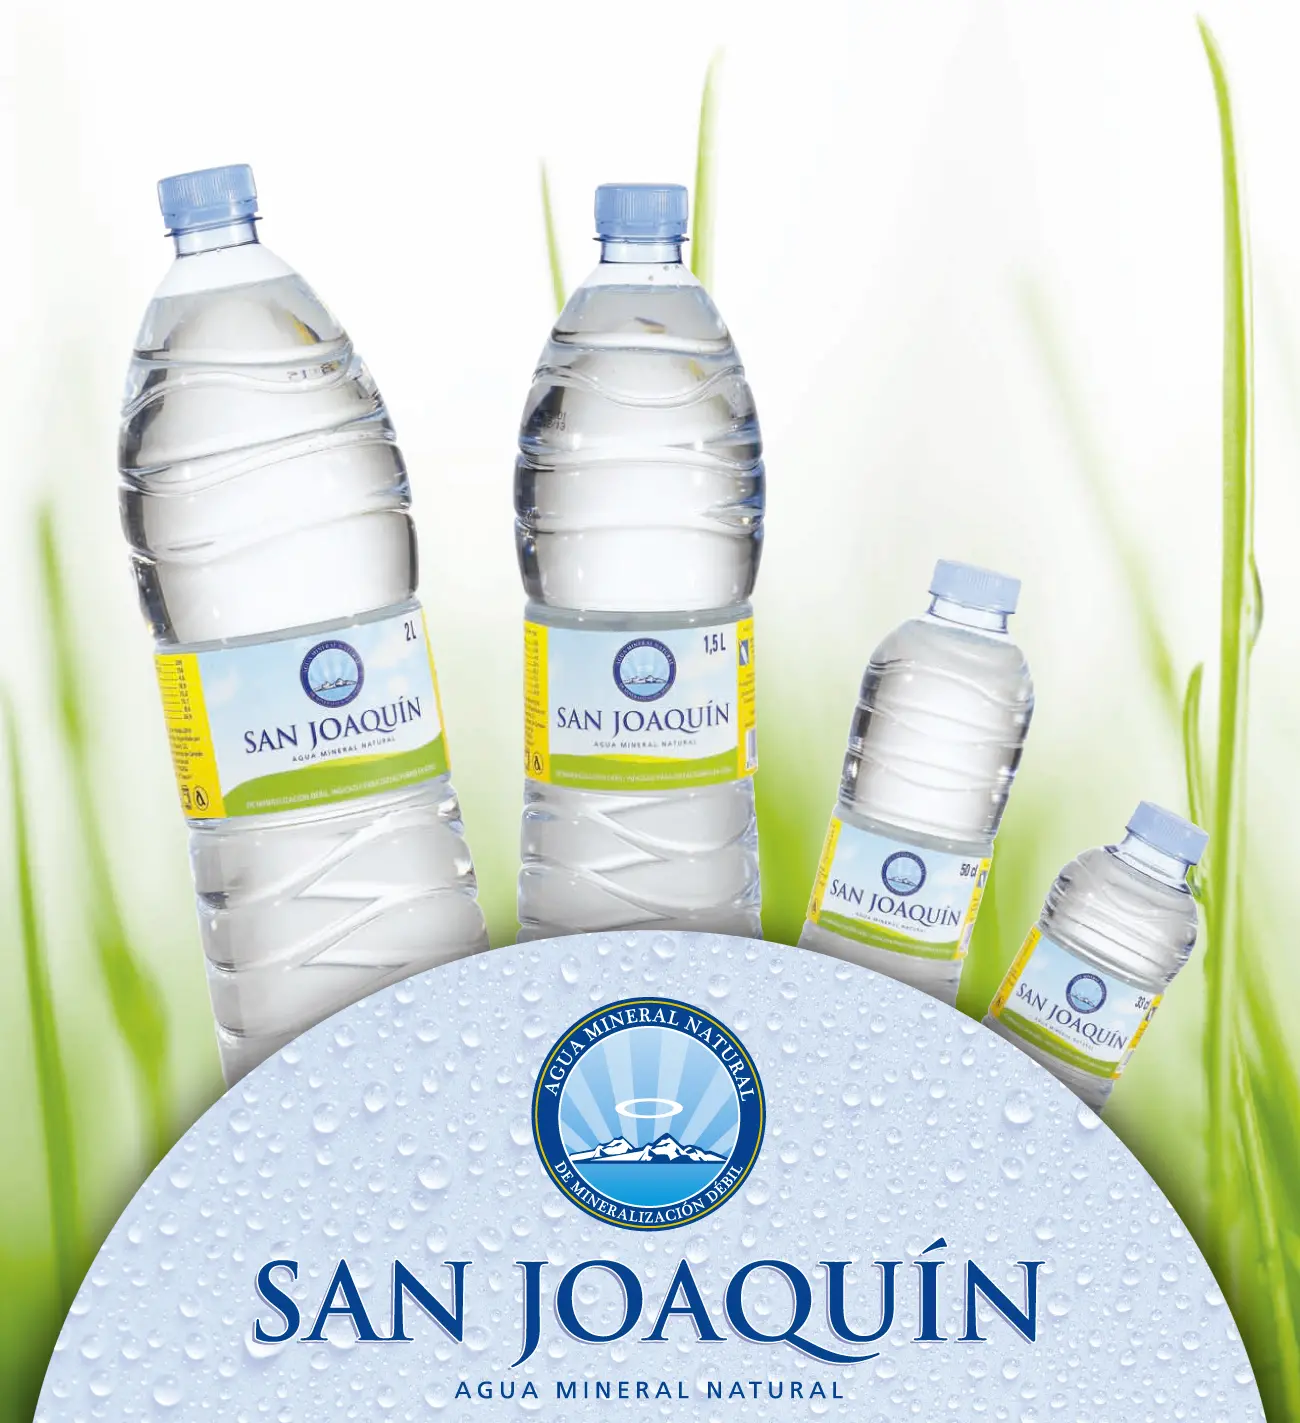 Aguas de San Joaquin varios formatos.webp